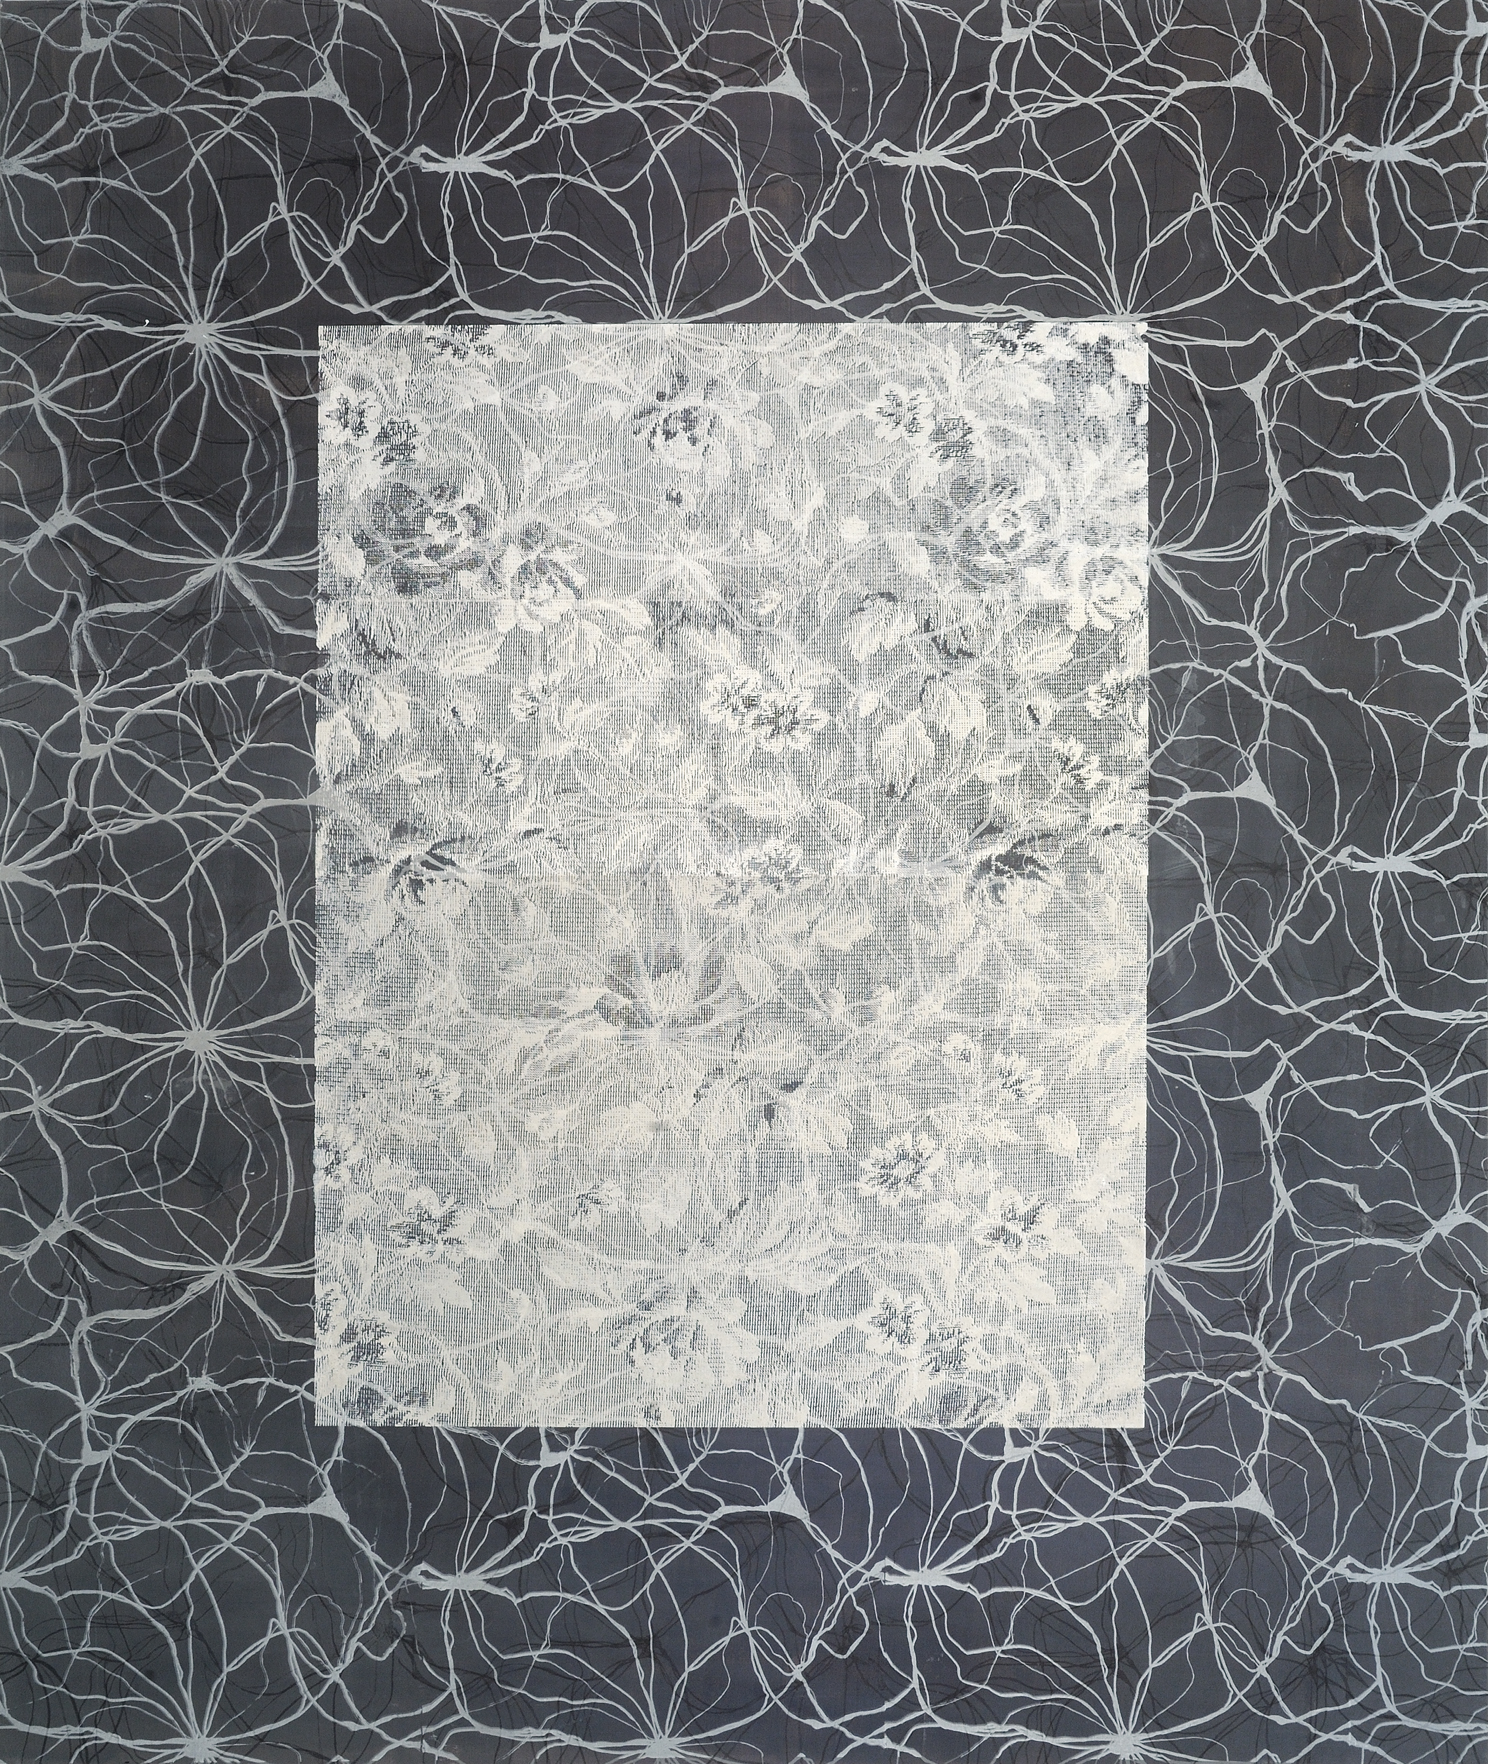 Tapestry I 137x163 2012